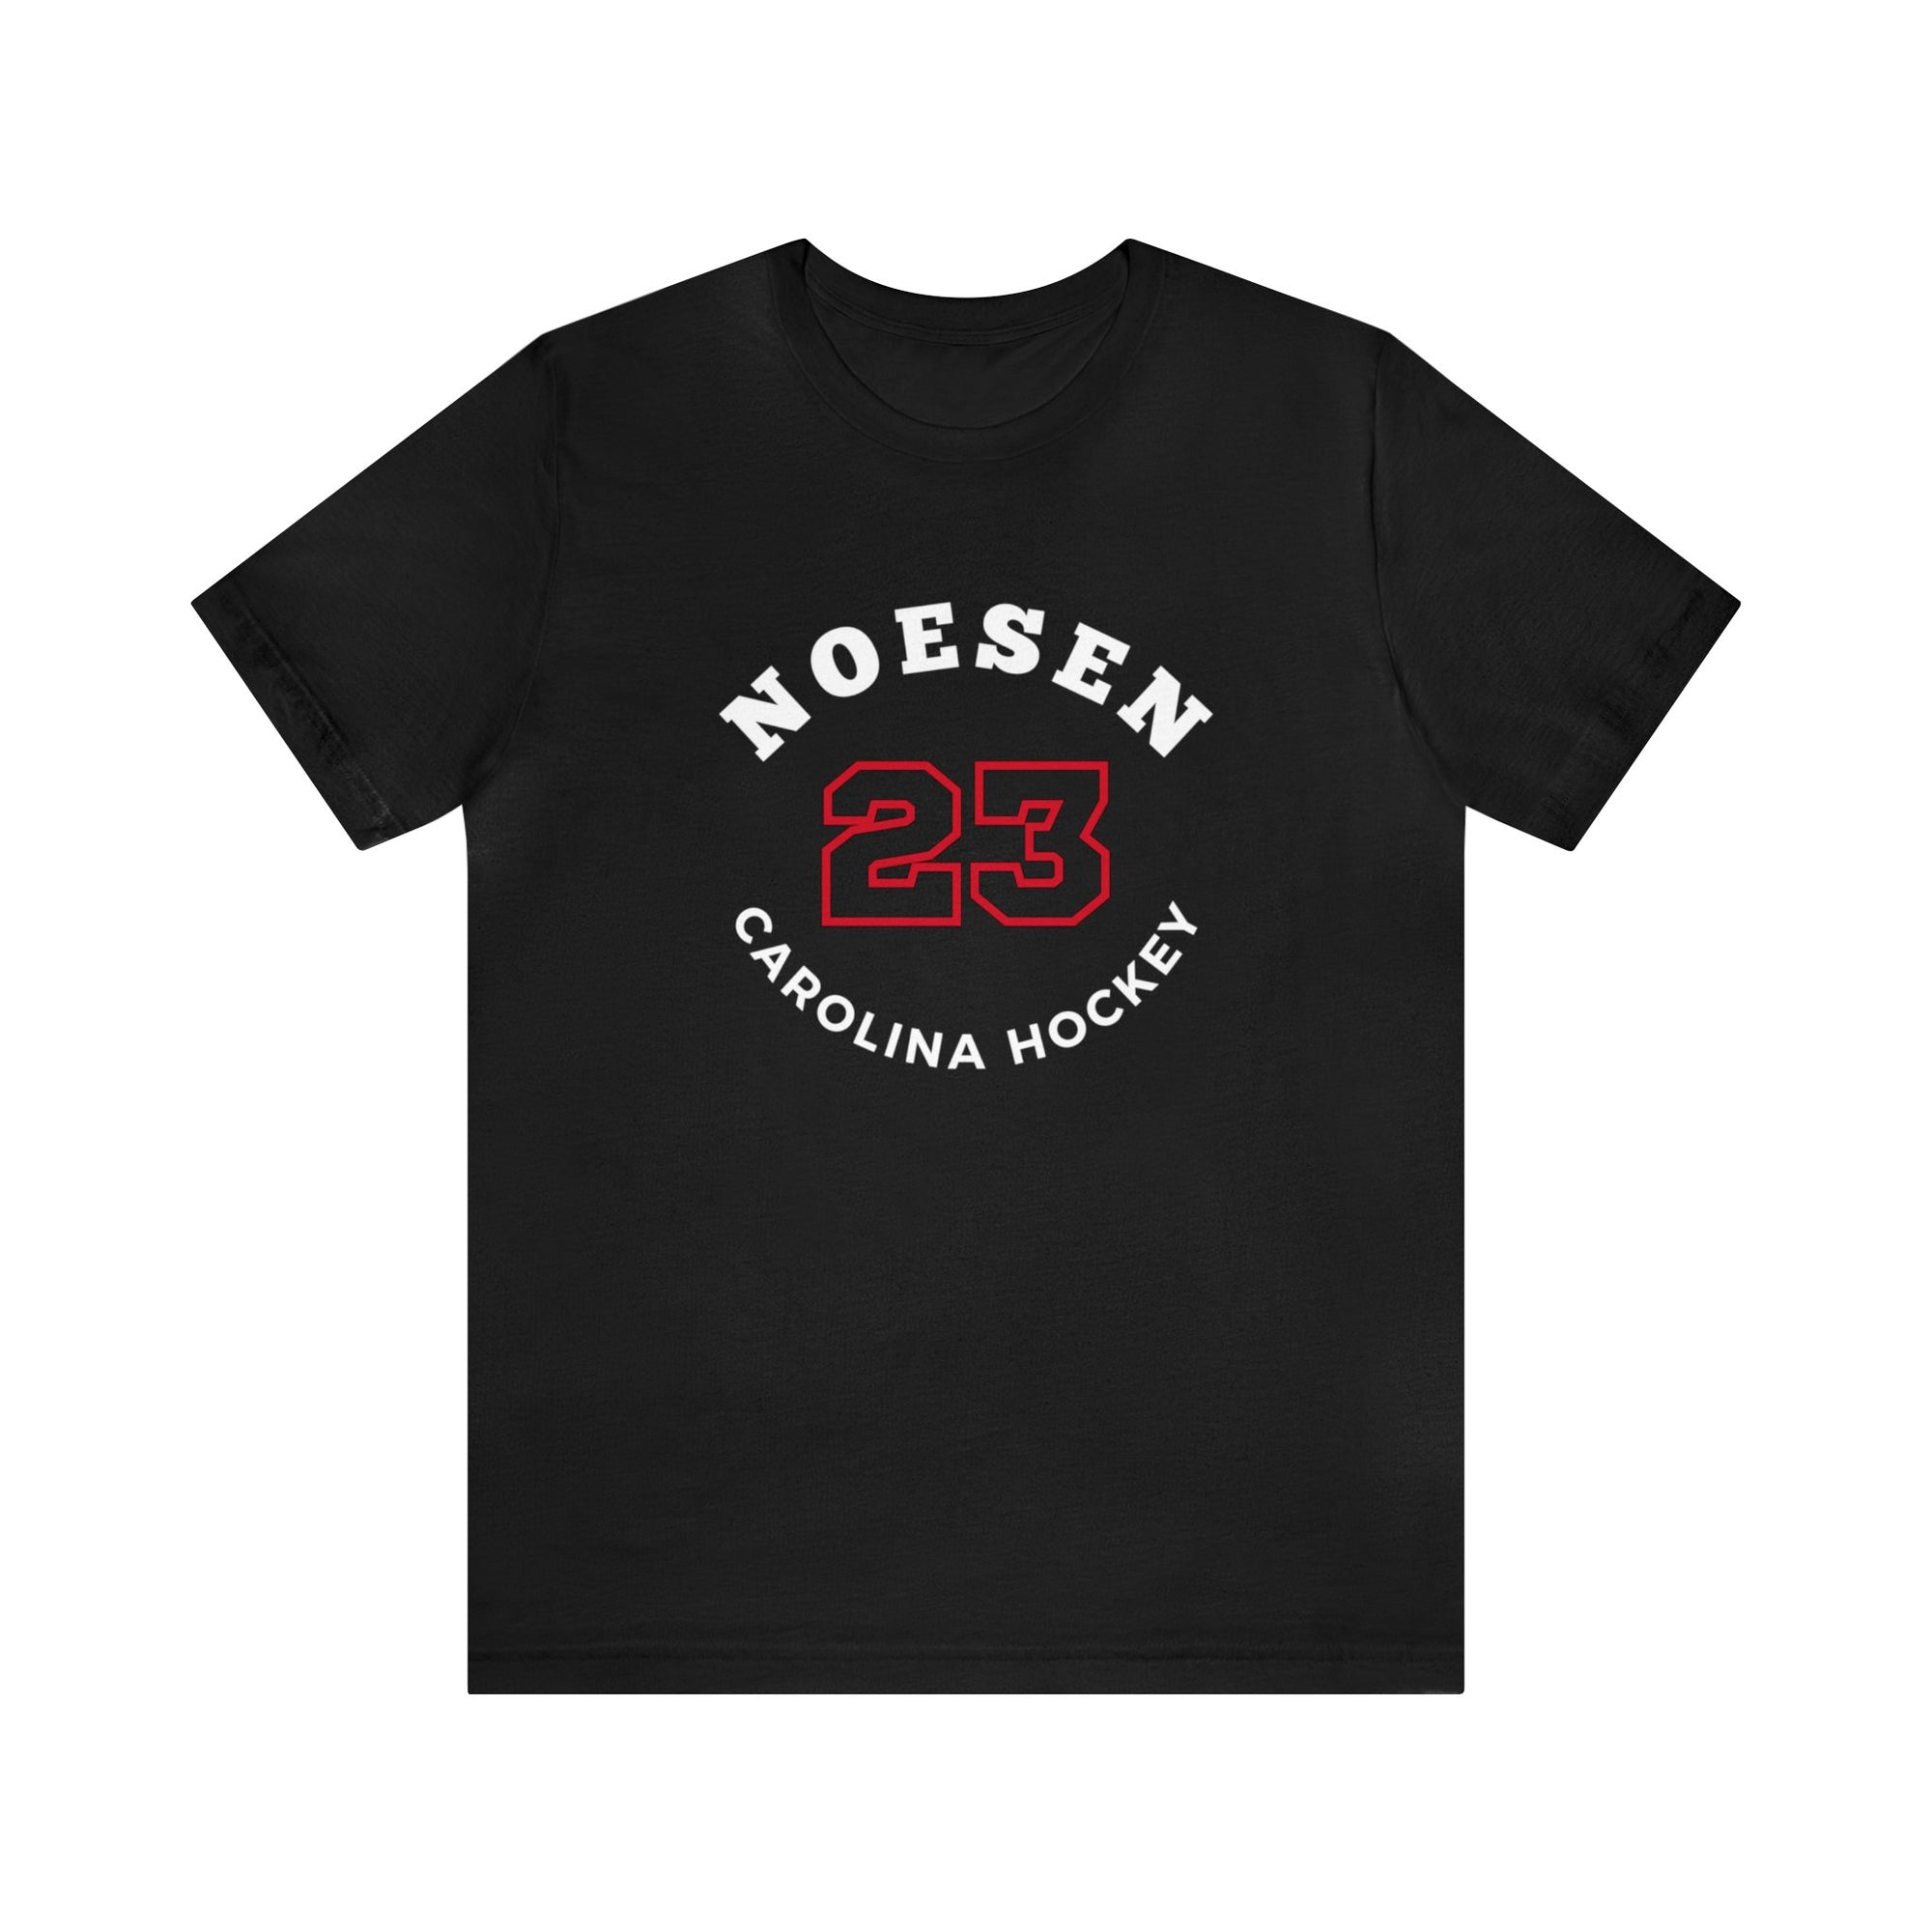 Noesen 23 Carolina Hockey Number Arch Design Unisex T-Shirt